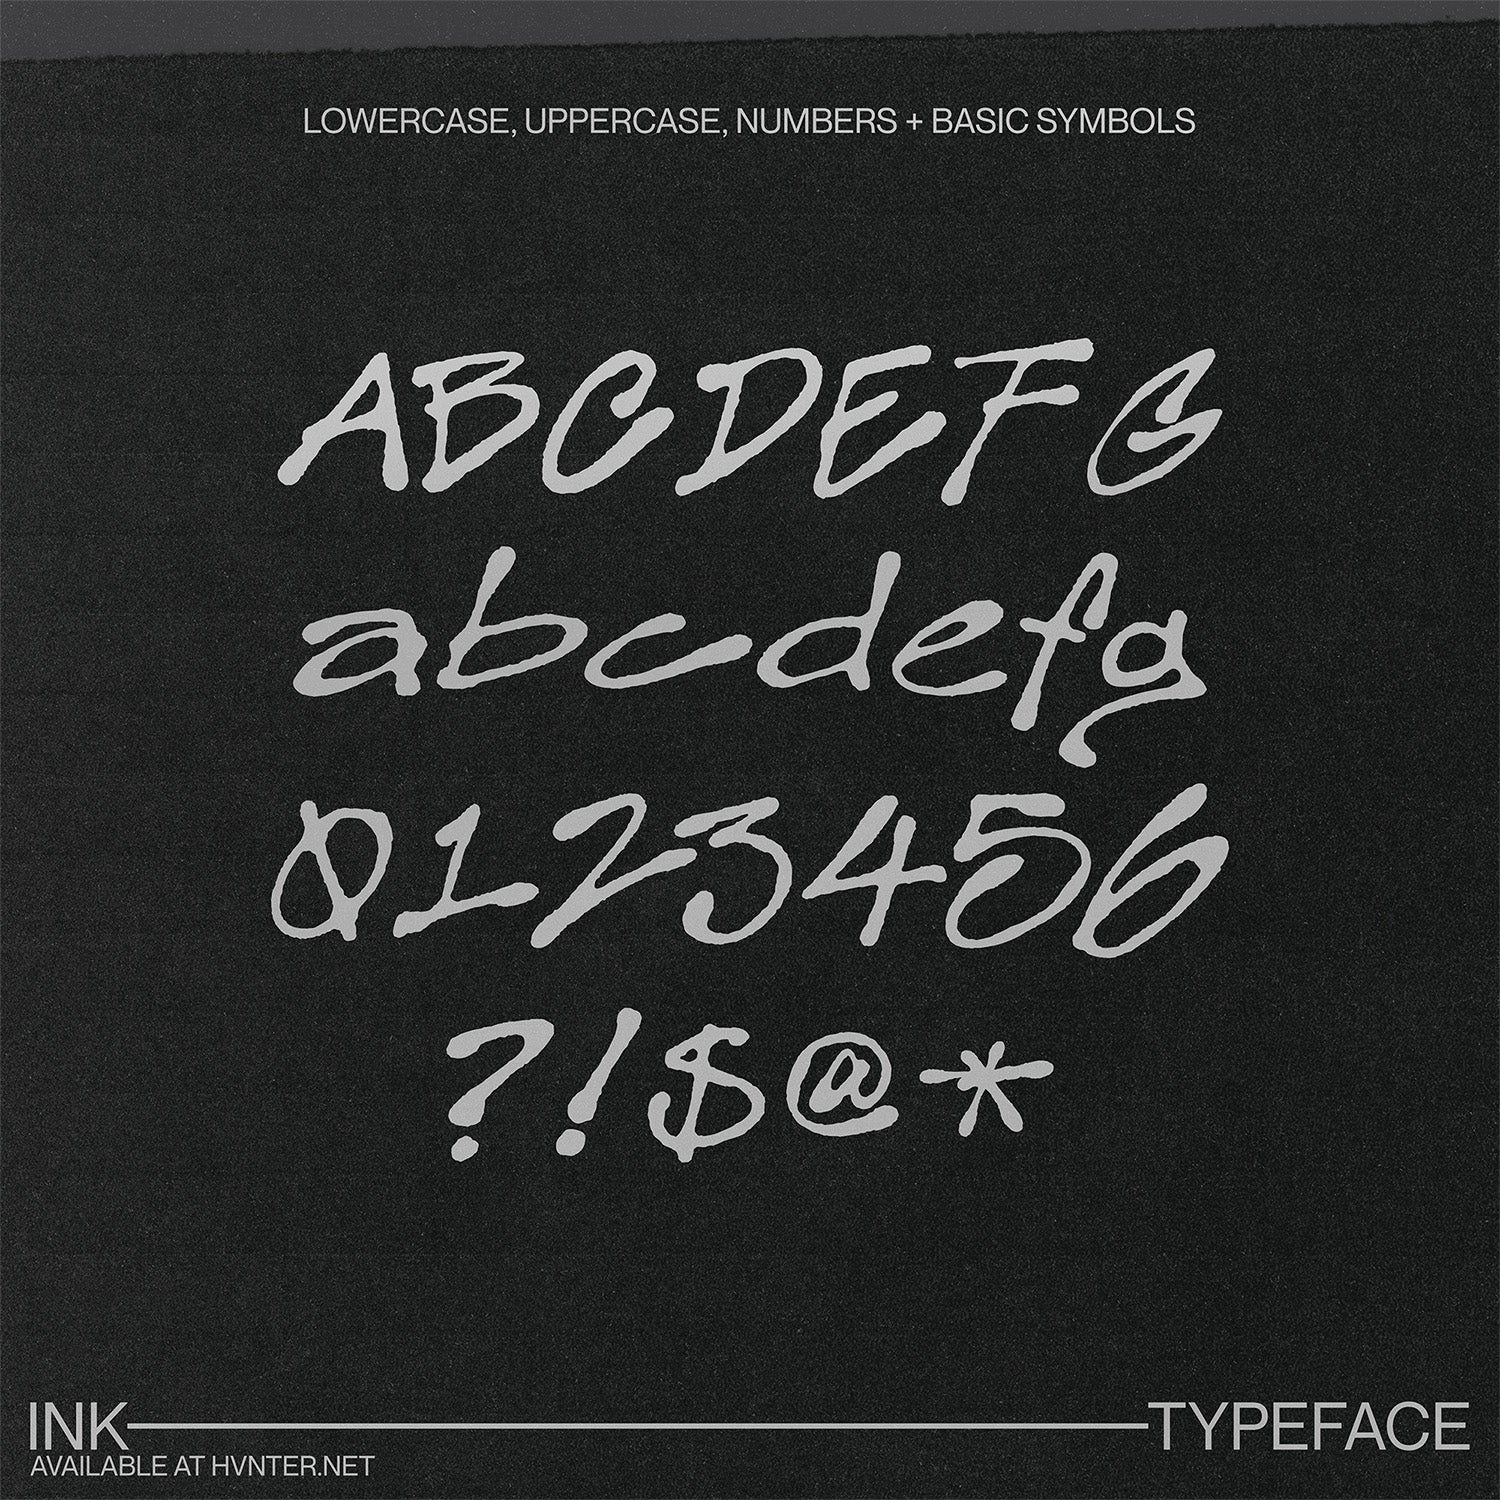 BADGER Typeface